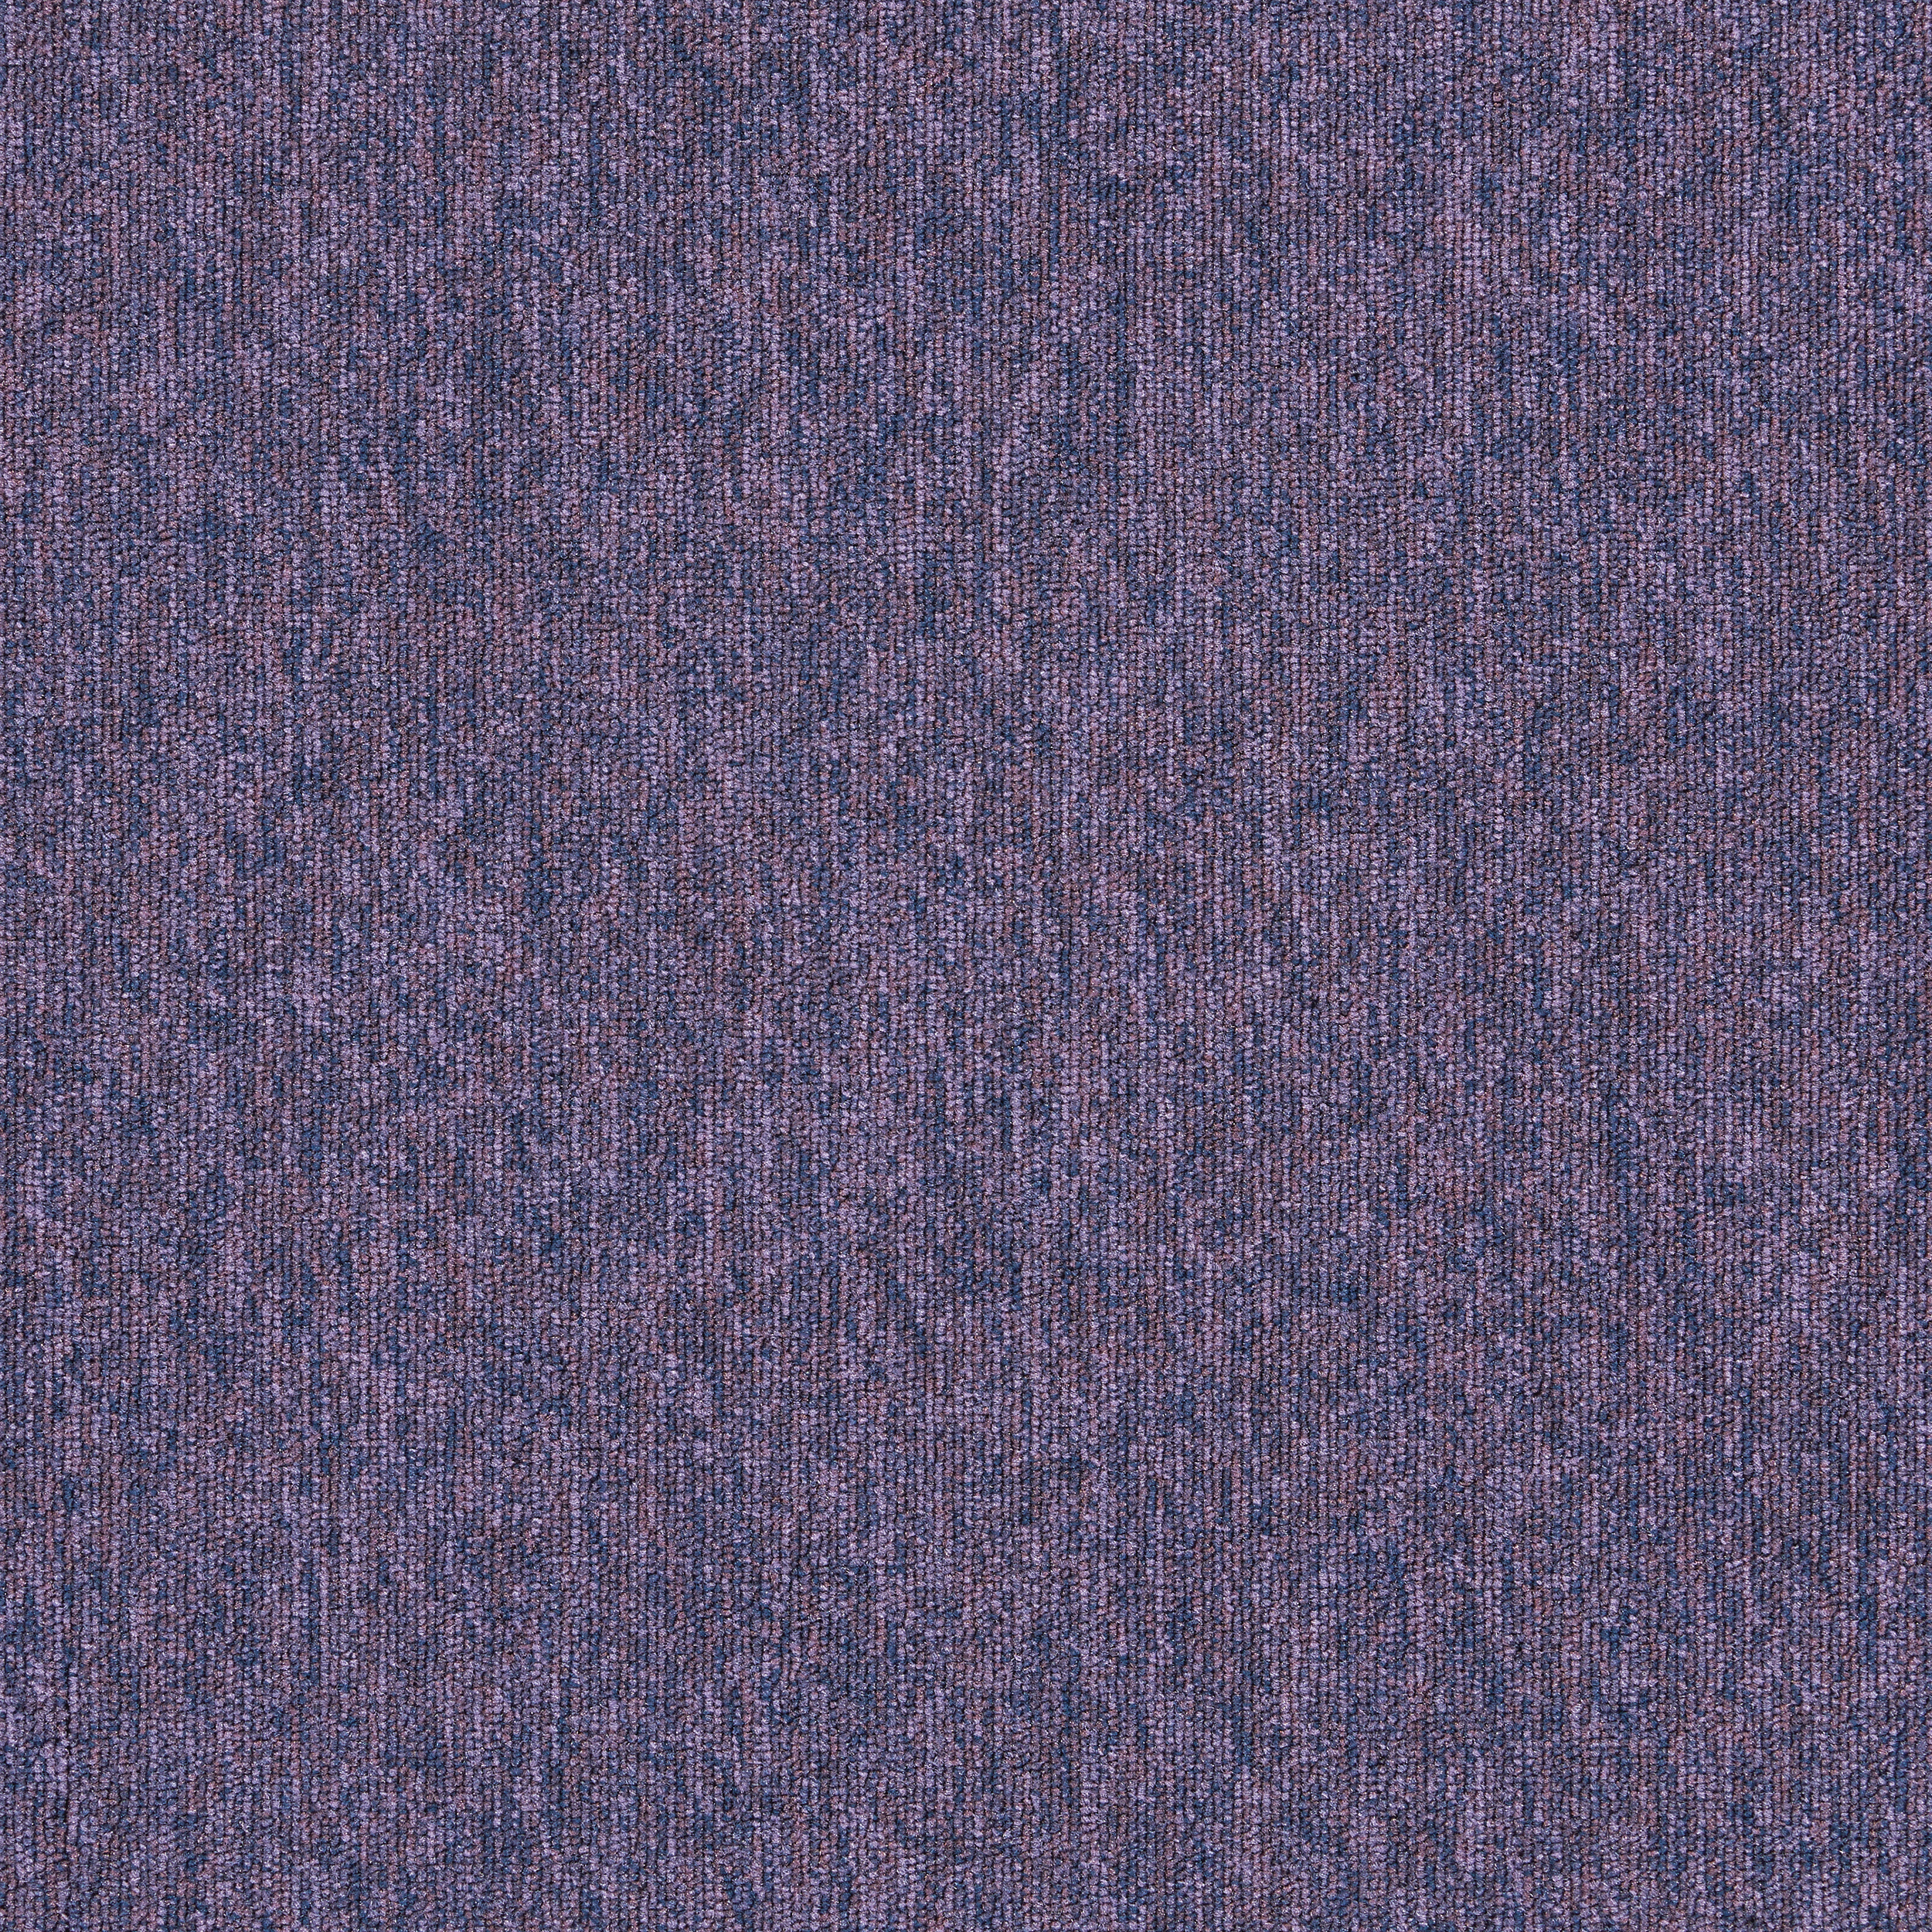 4197-023-000 Lavender